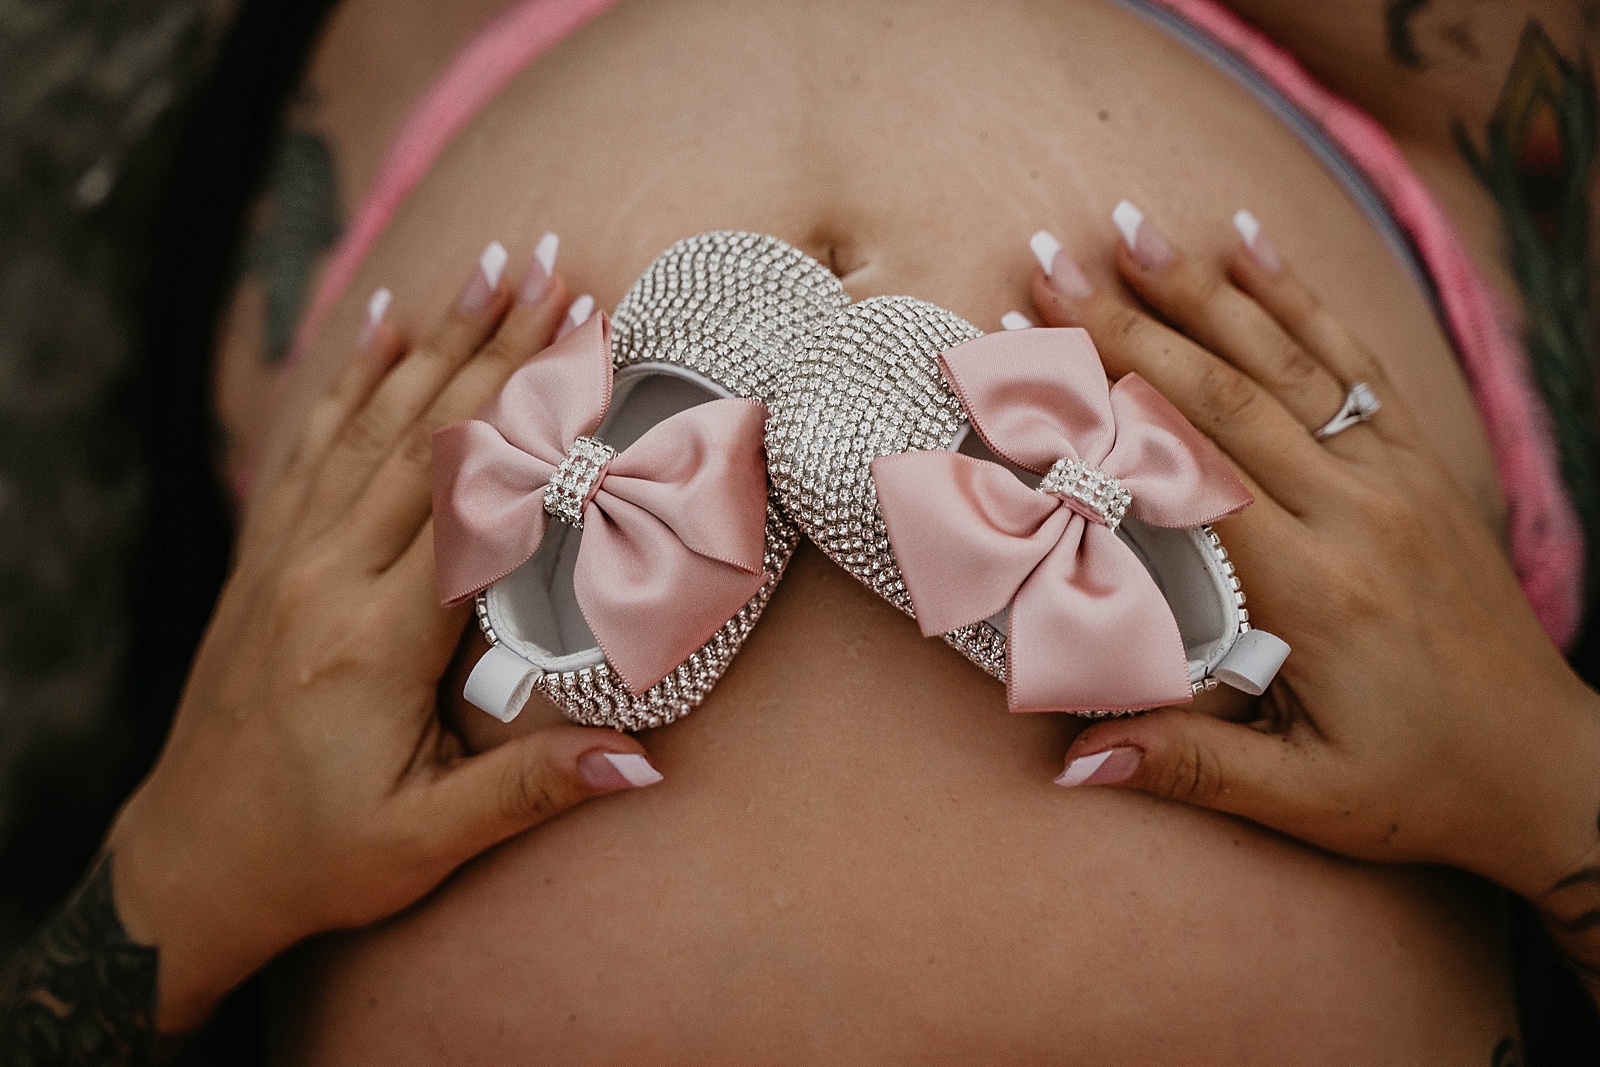 Palm Beach Maternity Photos by South Florida Lifestyle Photographer, Krystal Capone Photography